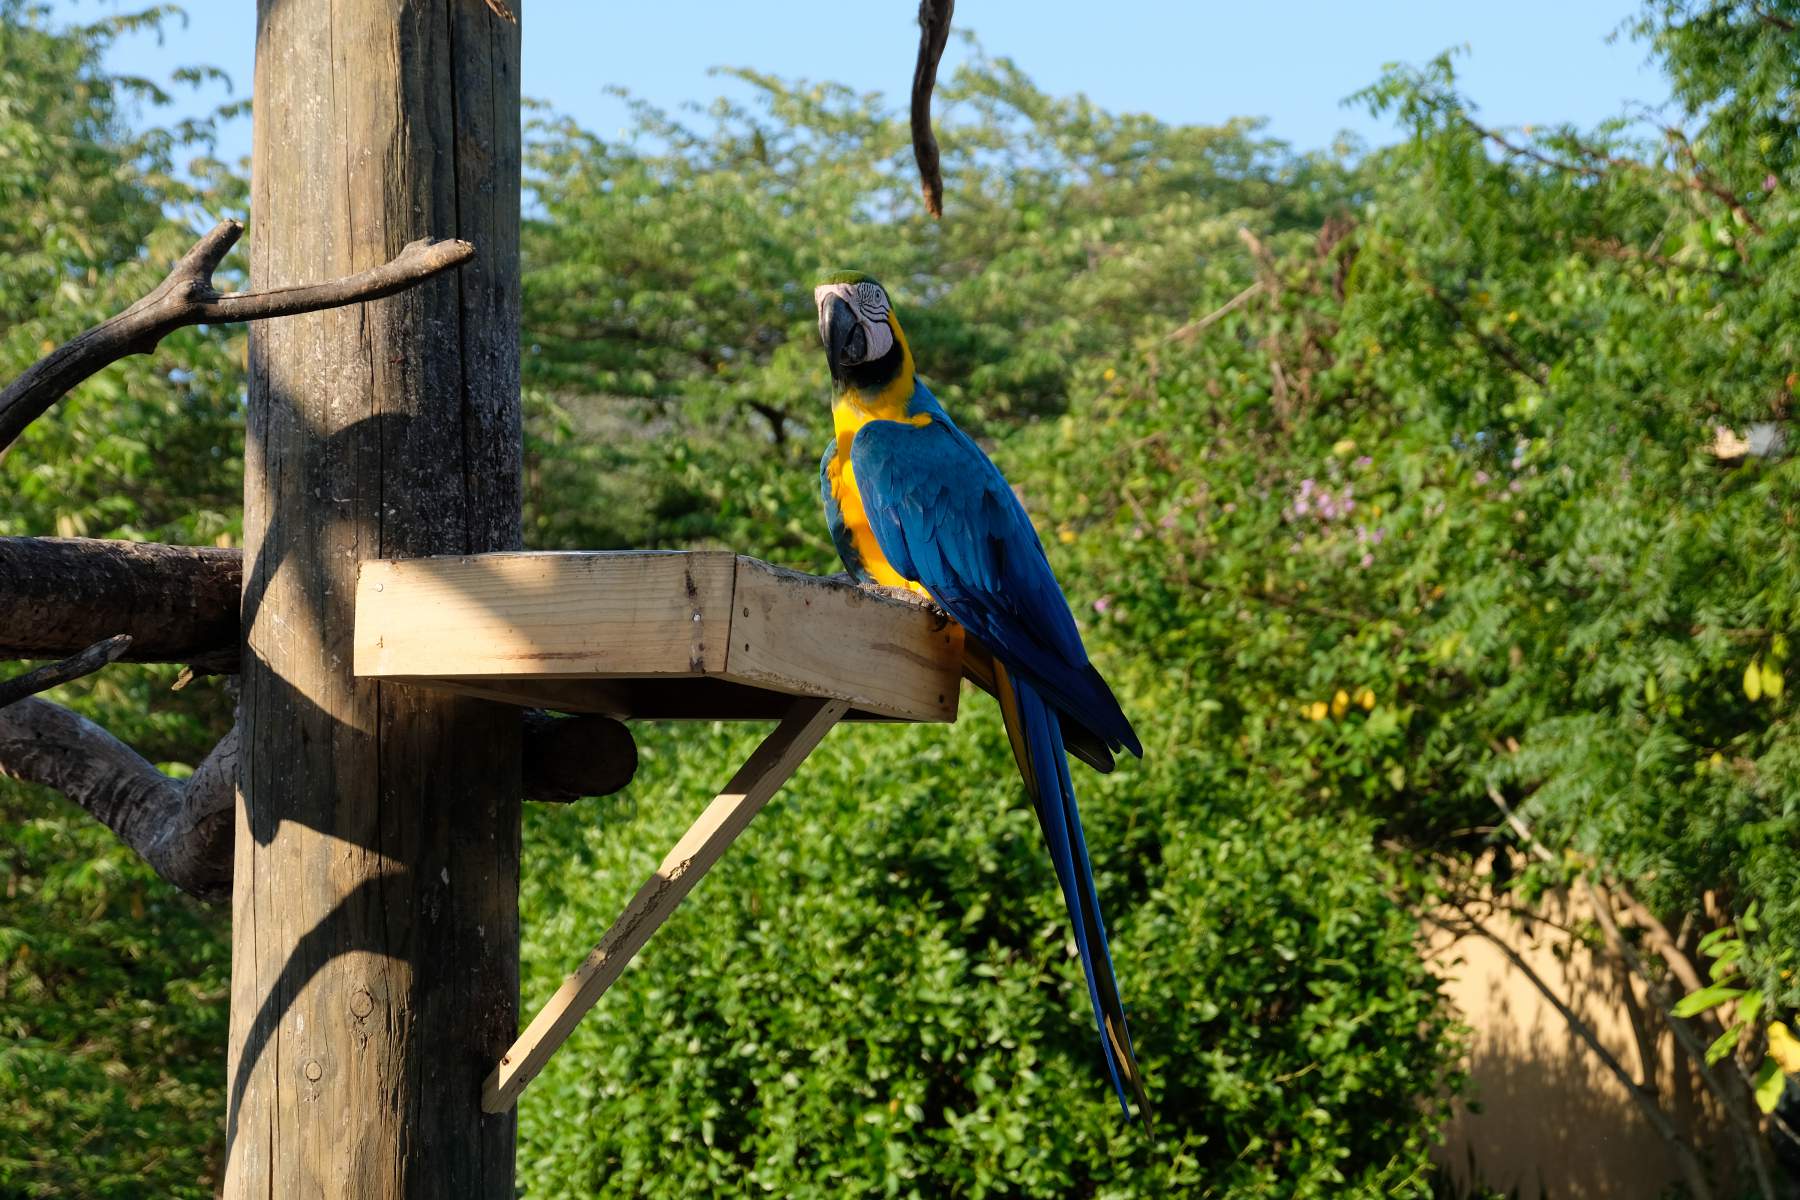 Parrot at the Bird Sanctuary Aviario Nacional on Isla Barú, Colombia